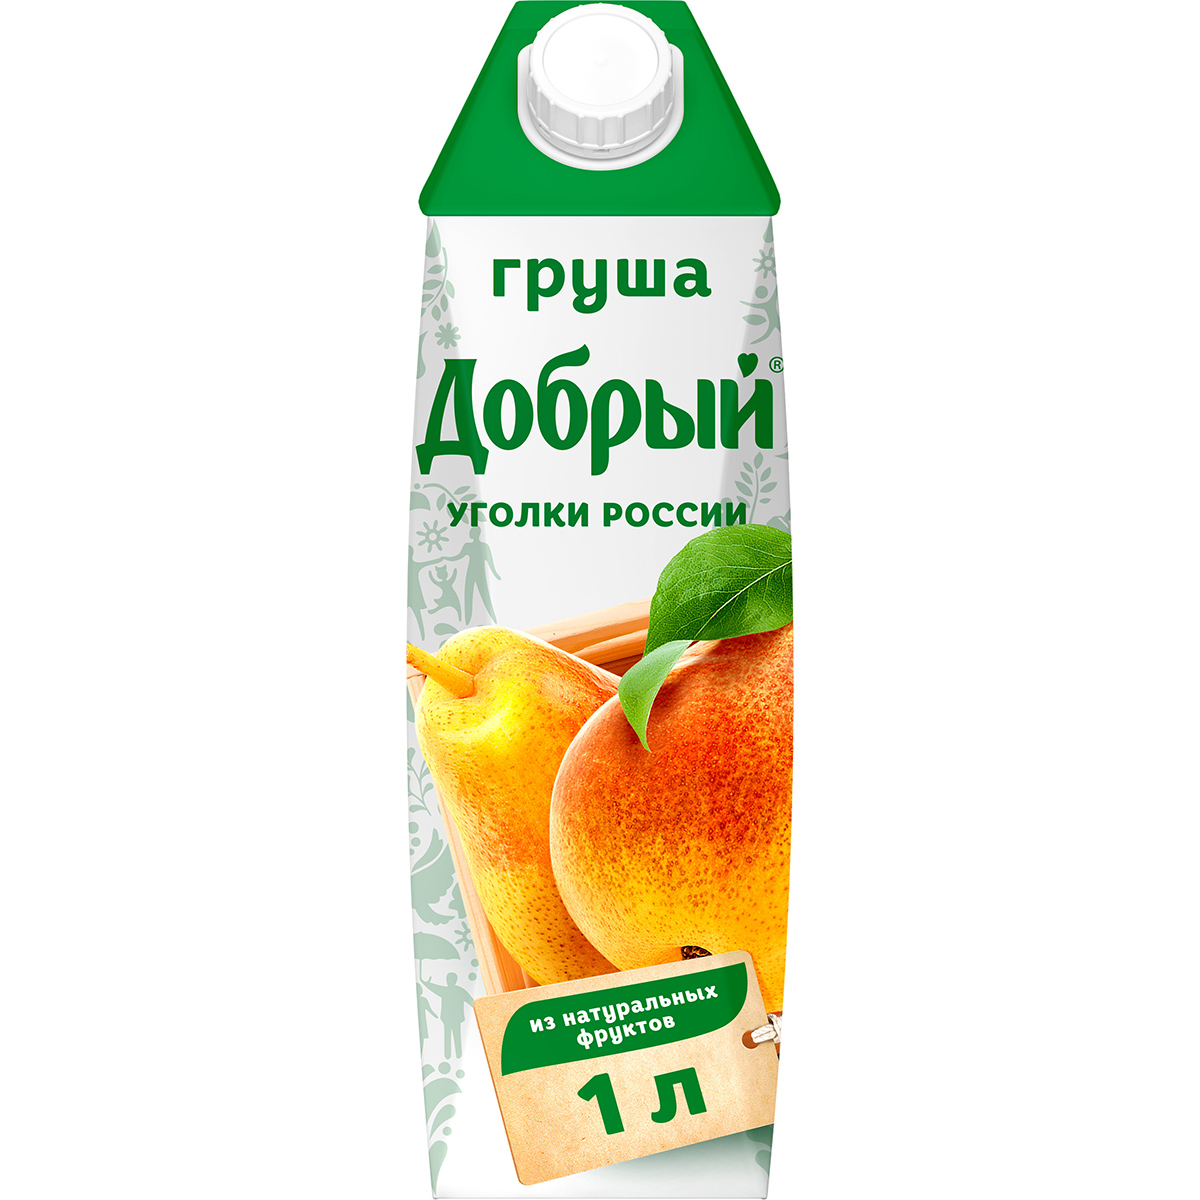 Нектар Добрый Уголки России Груша 1 л нектар добрый ананас 2 литра